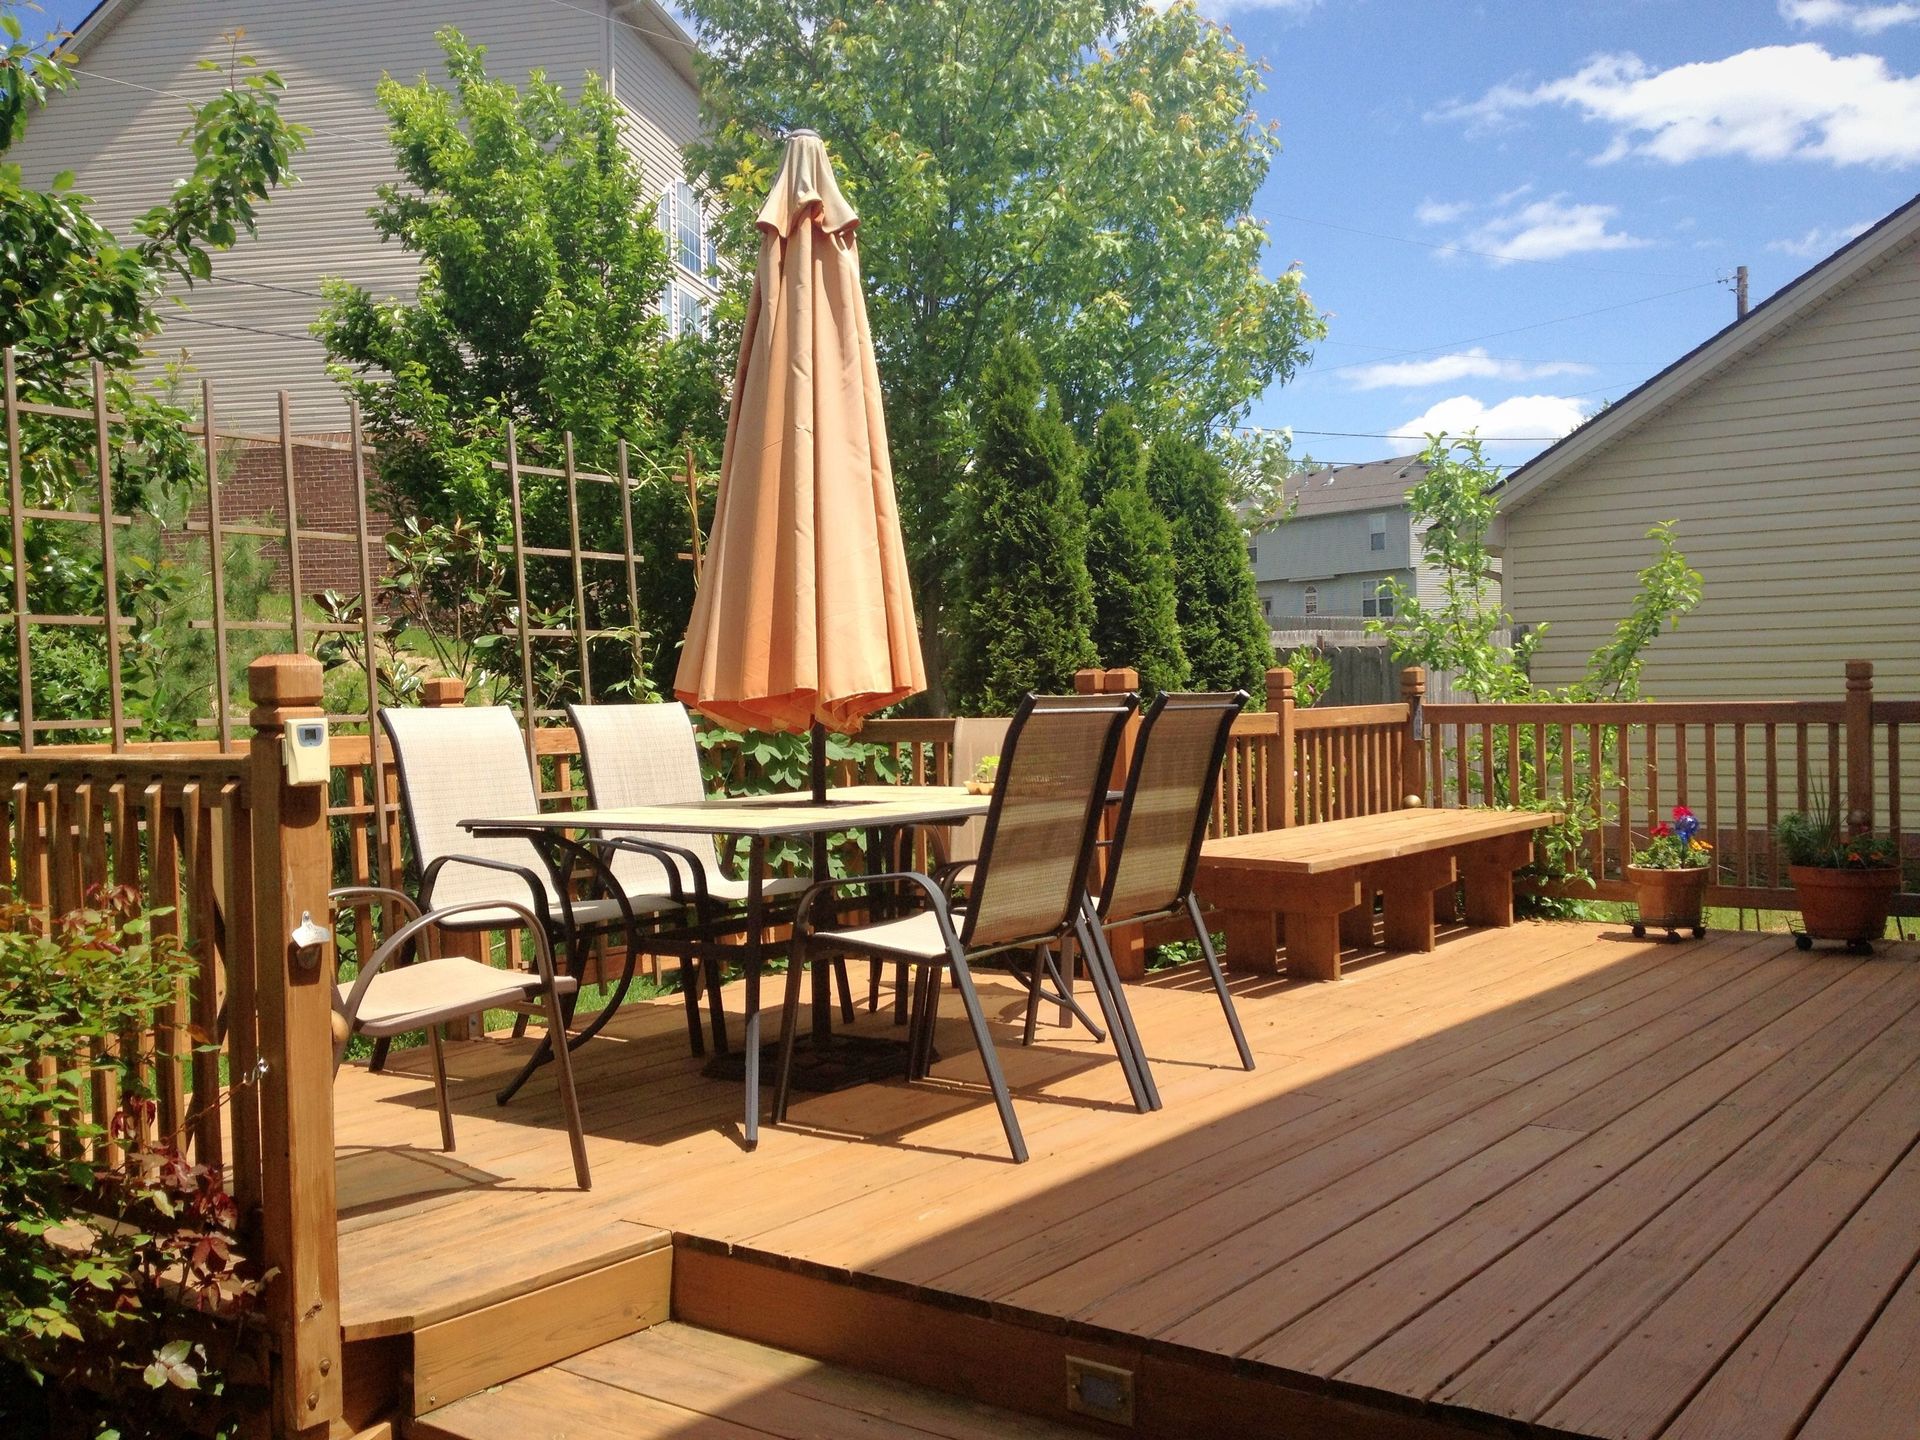 A lush, vibrant summer garden with a wooden deck.